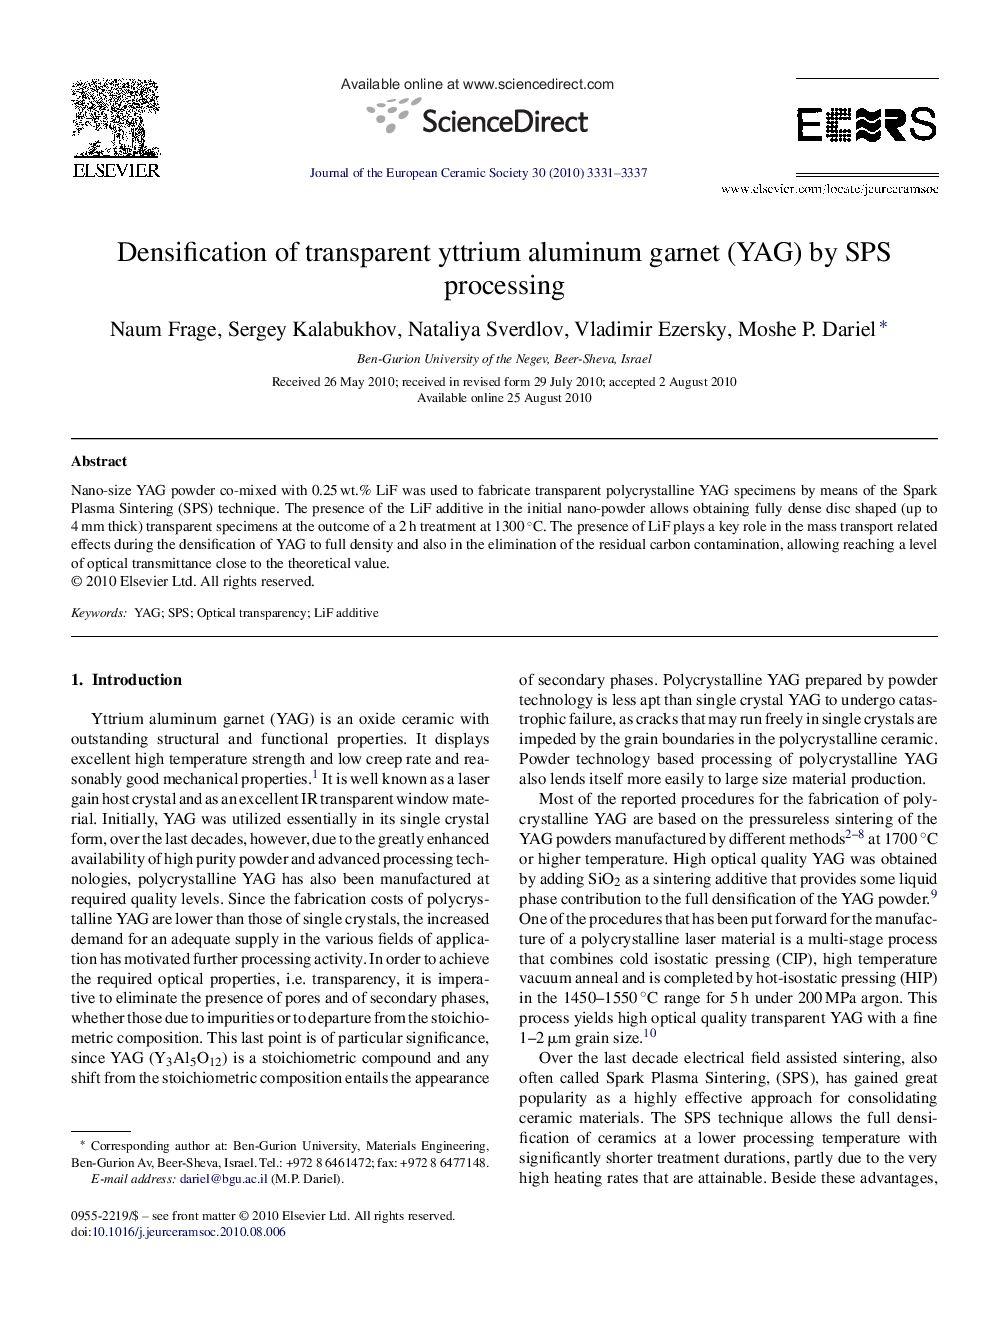 Densification of transparent yttrium aluminum garnet (YAG) by SPS processing